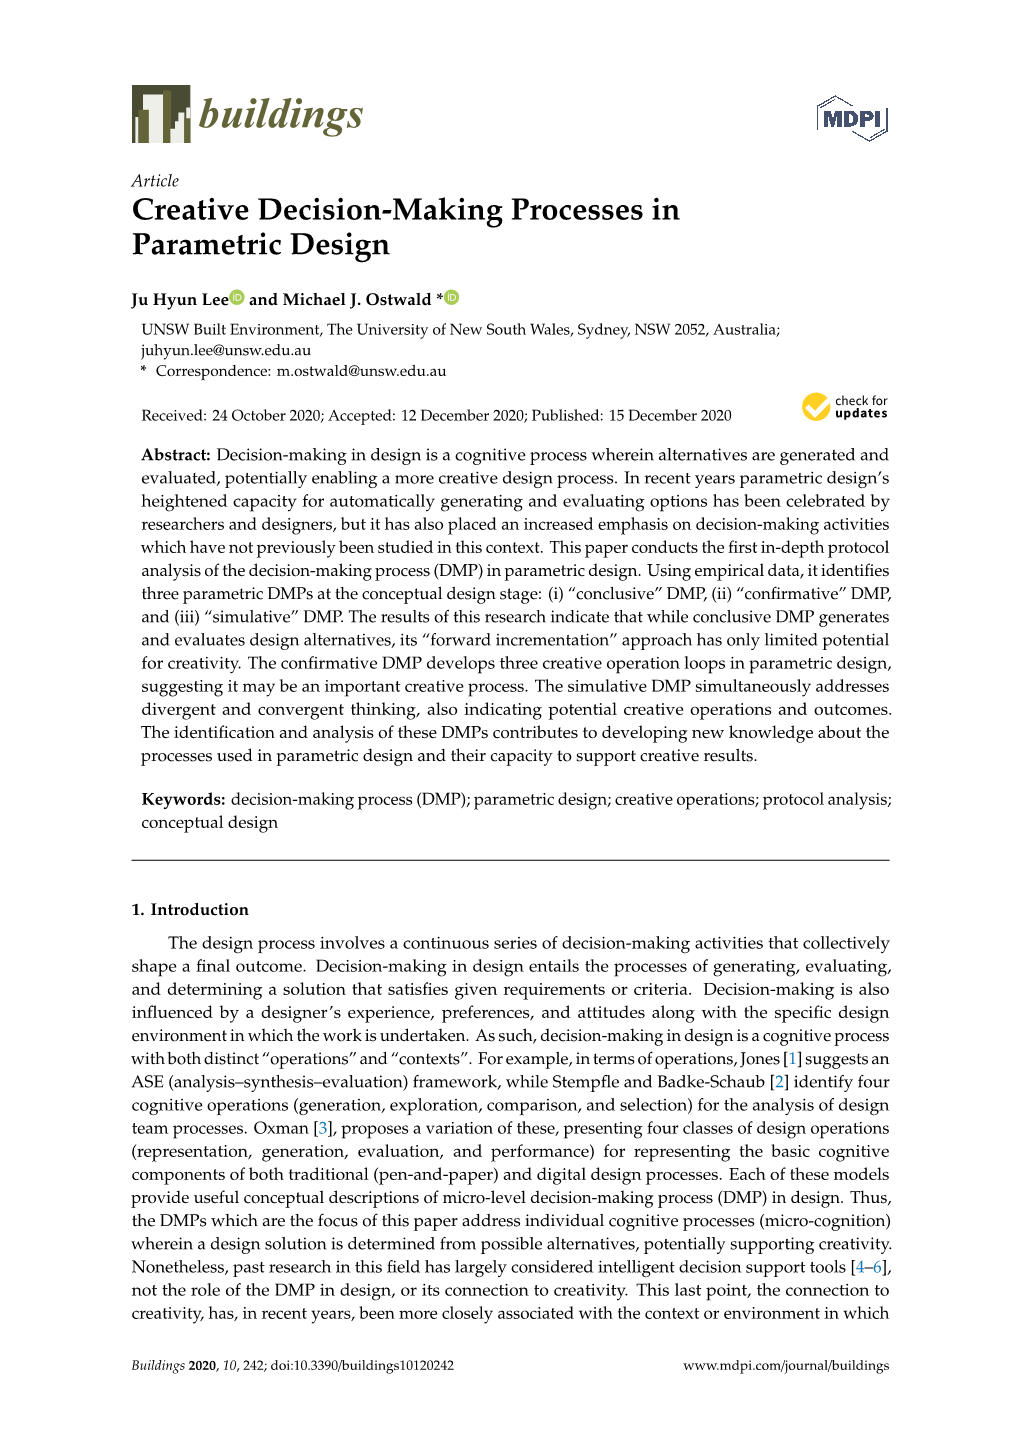 Creative Decision-Making Processes in Parametric Design